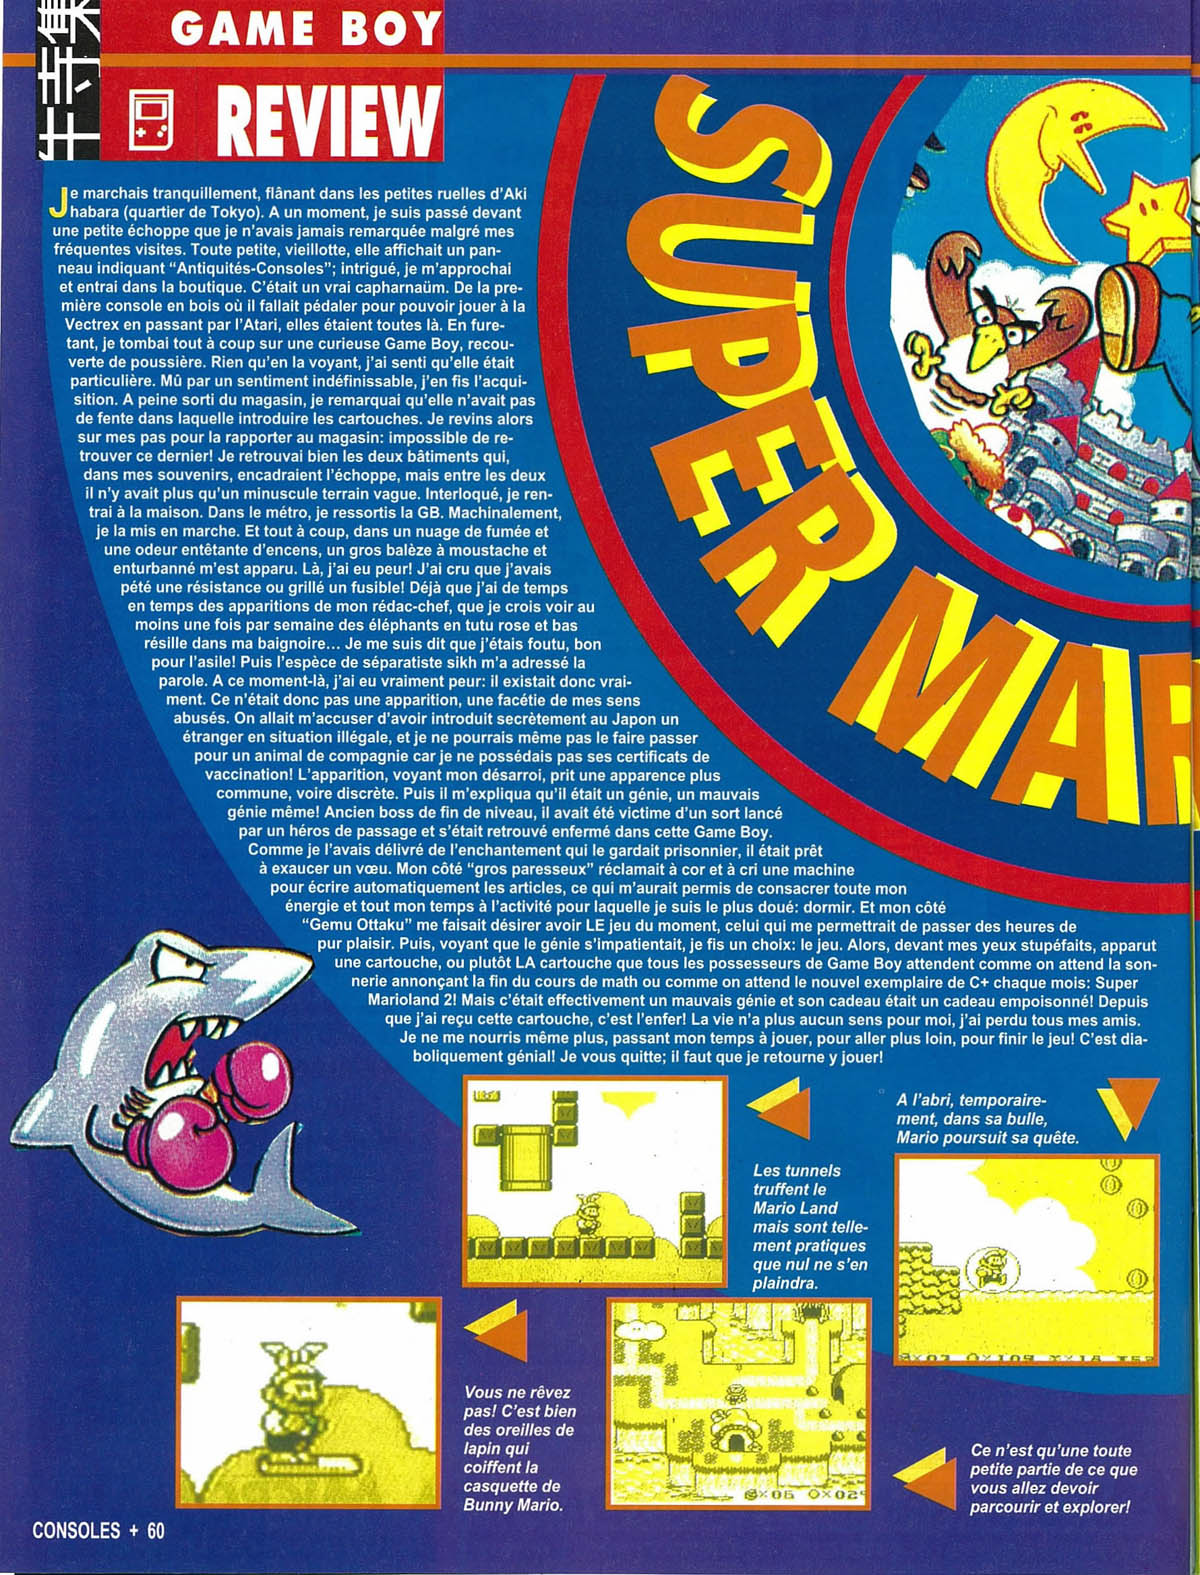 tests//957/Consoles + 014 Page 060 (novembre 1992).jpg